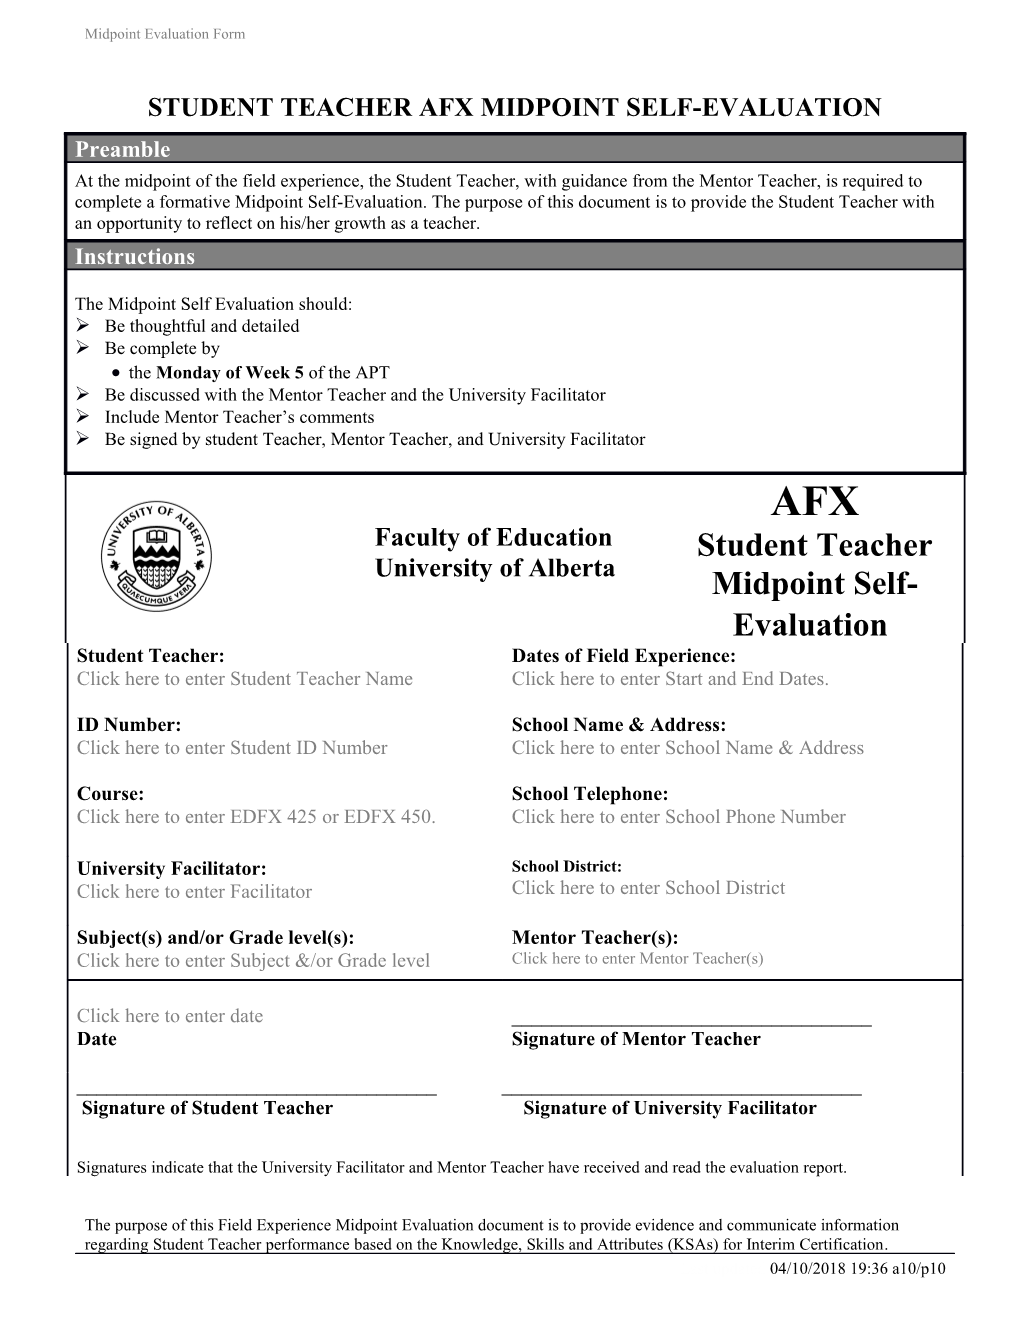 Student Teacher AFX Midpoint Self-Evaluation